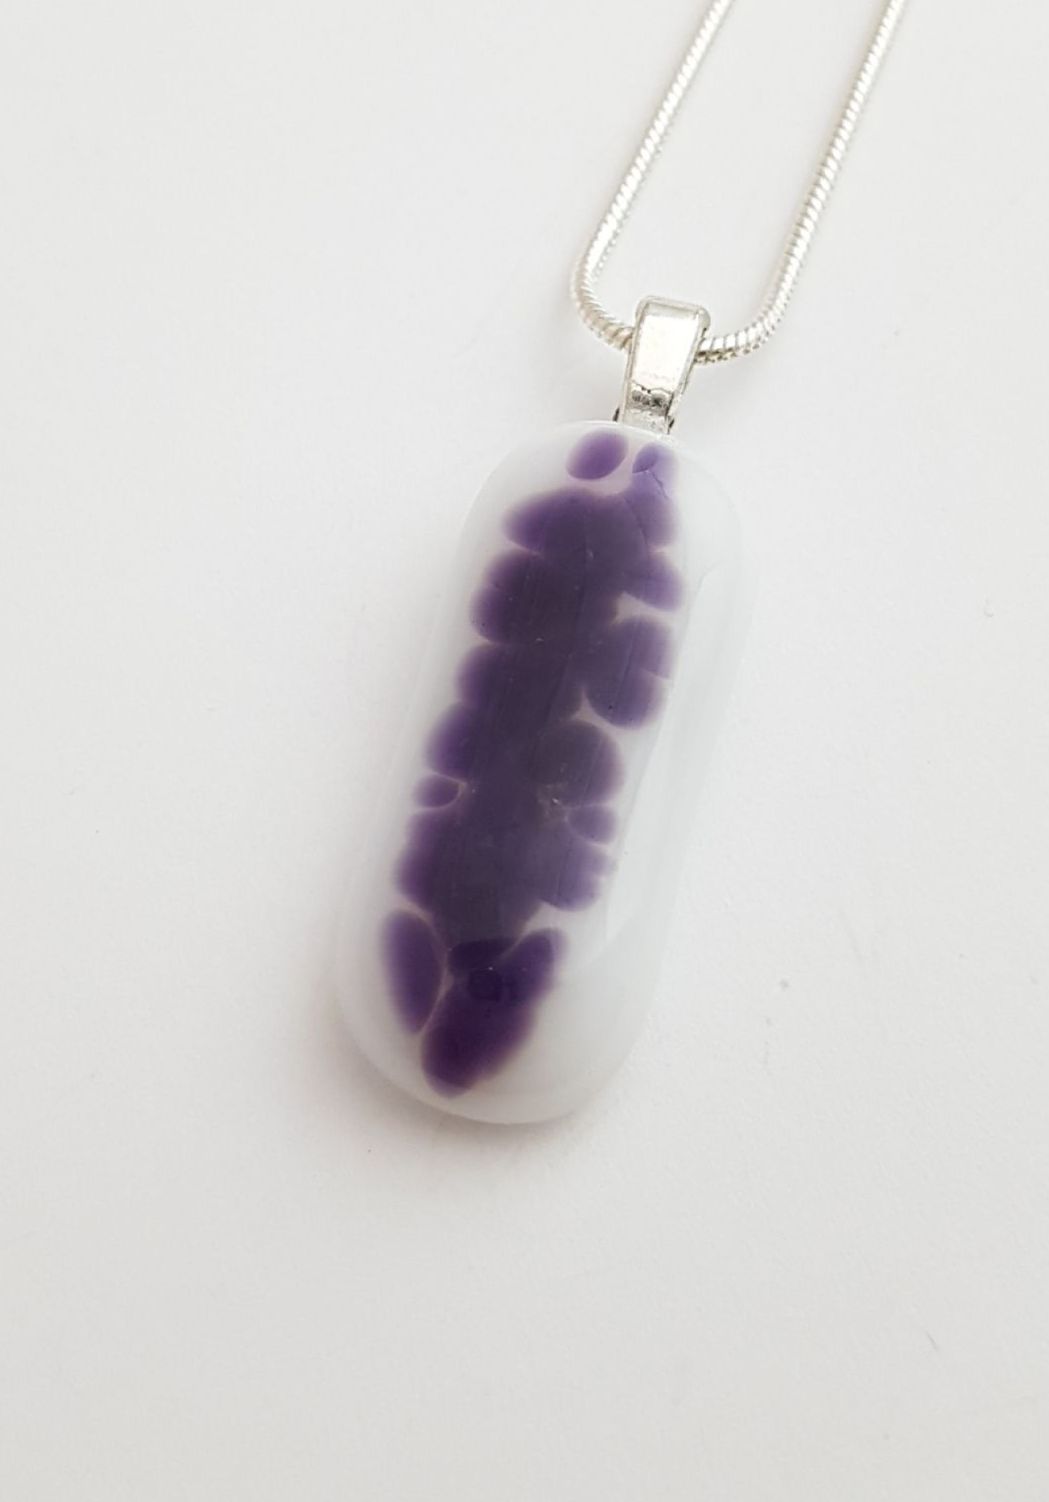 White with dark purple speckles pendant